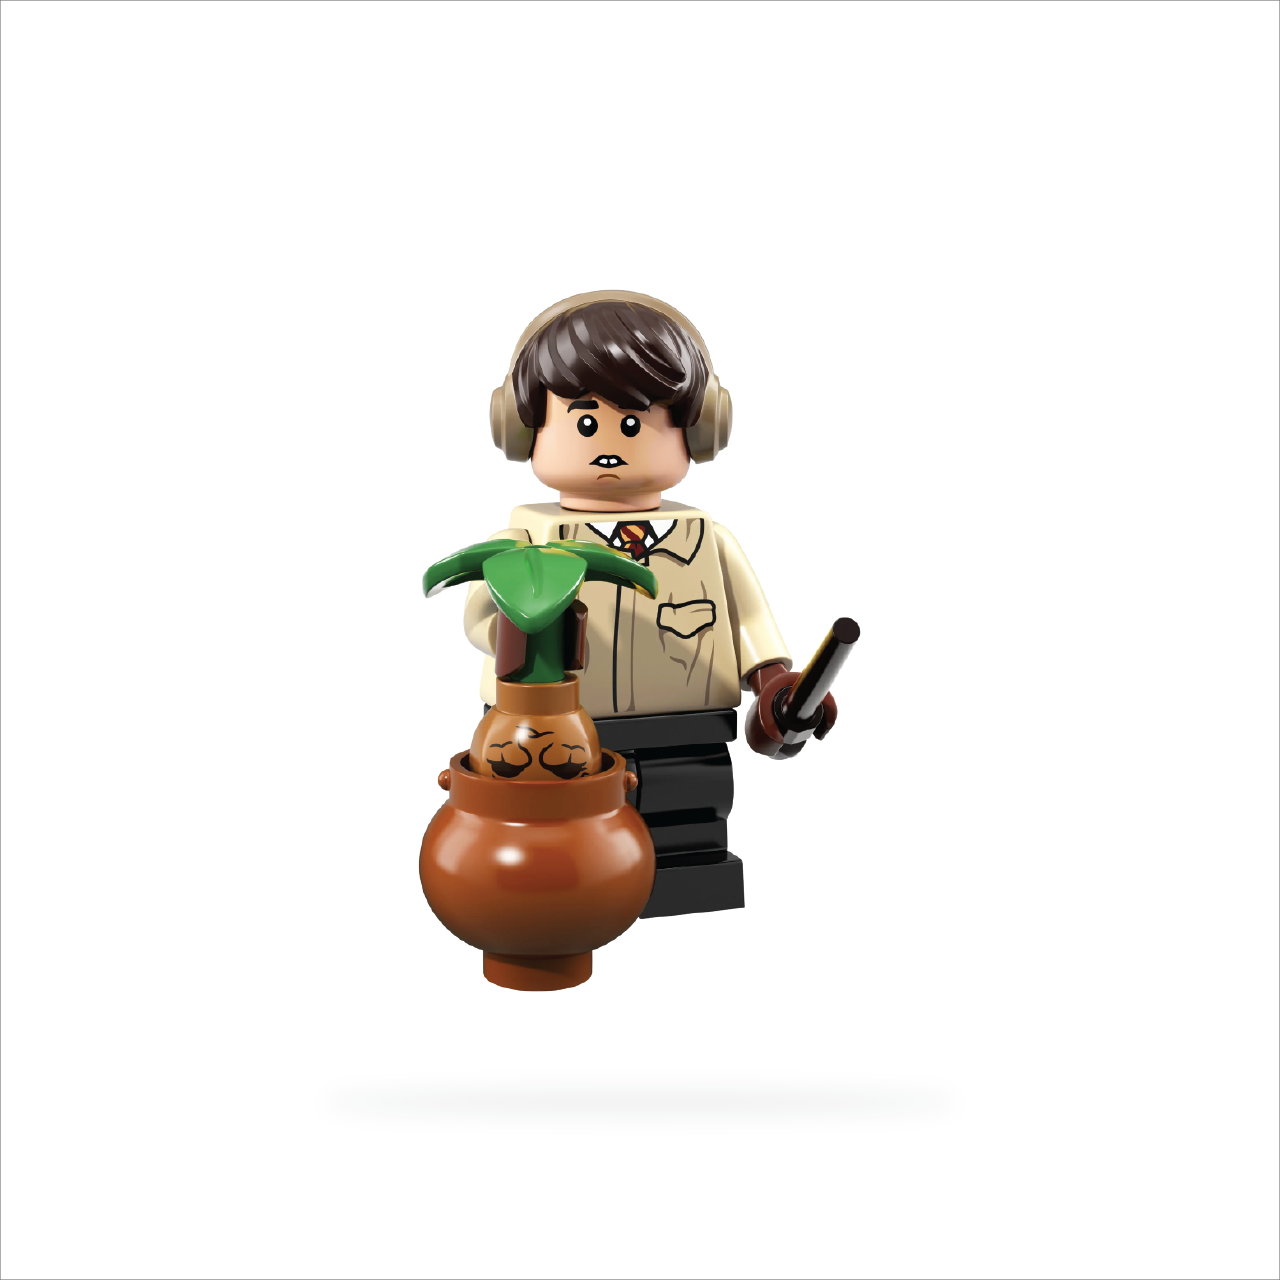 LEGO 71022-06 Minifigure Harry Potter and Fantastic Beasts Series 1 - Neville Longbottom